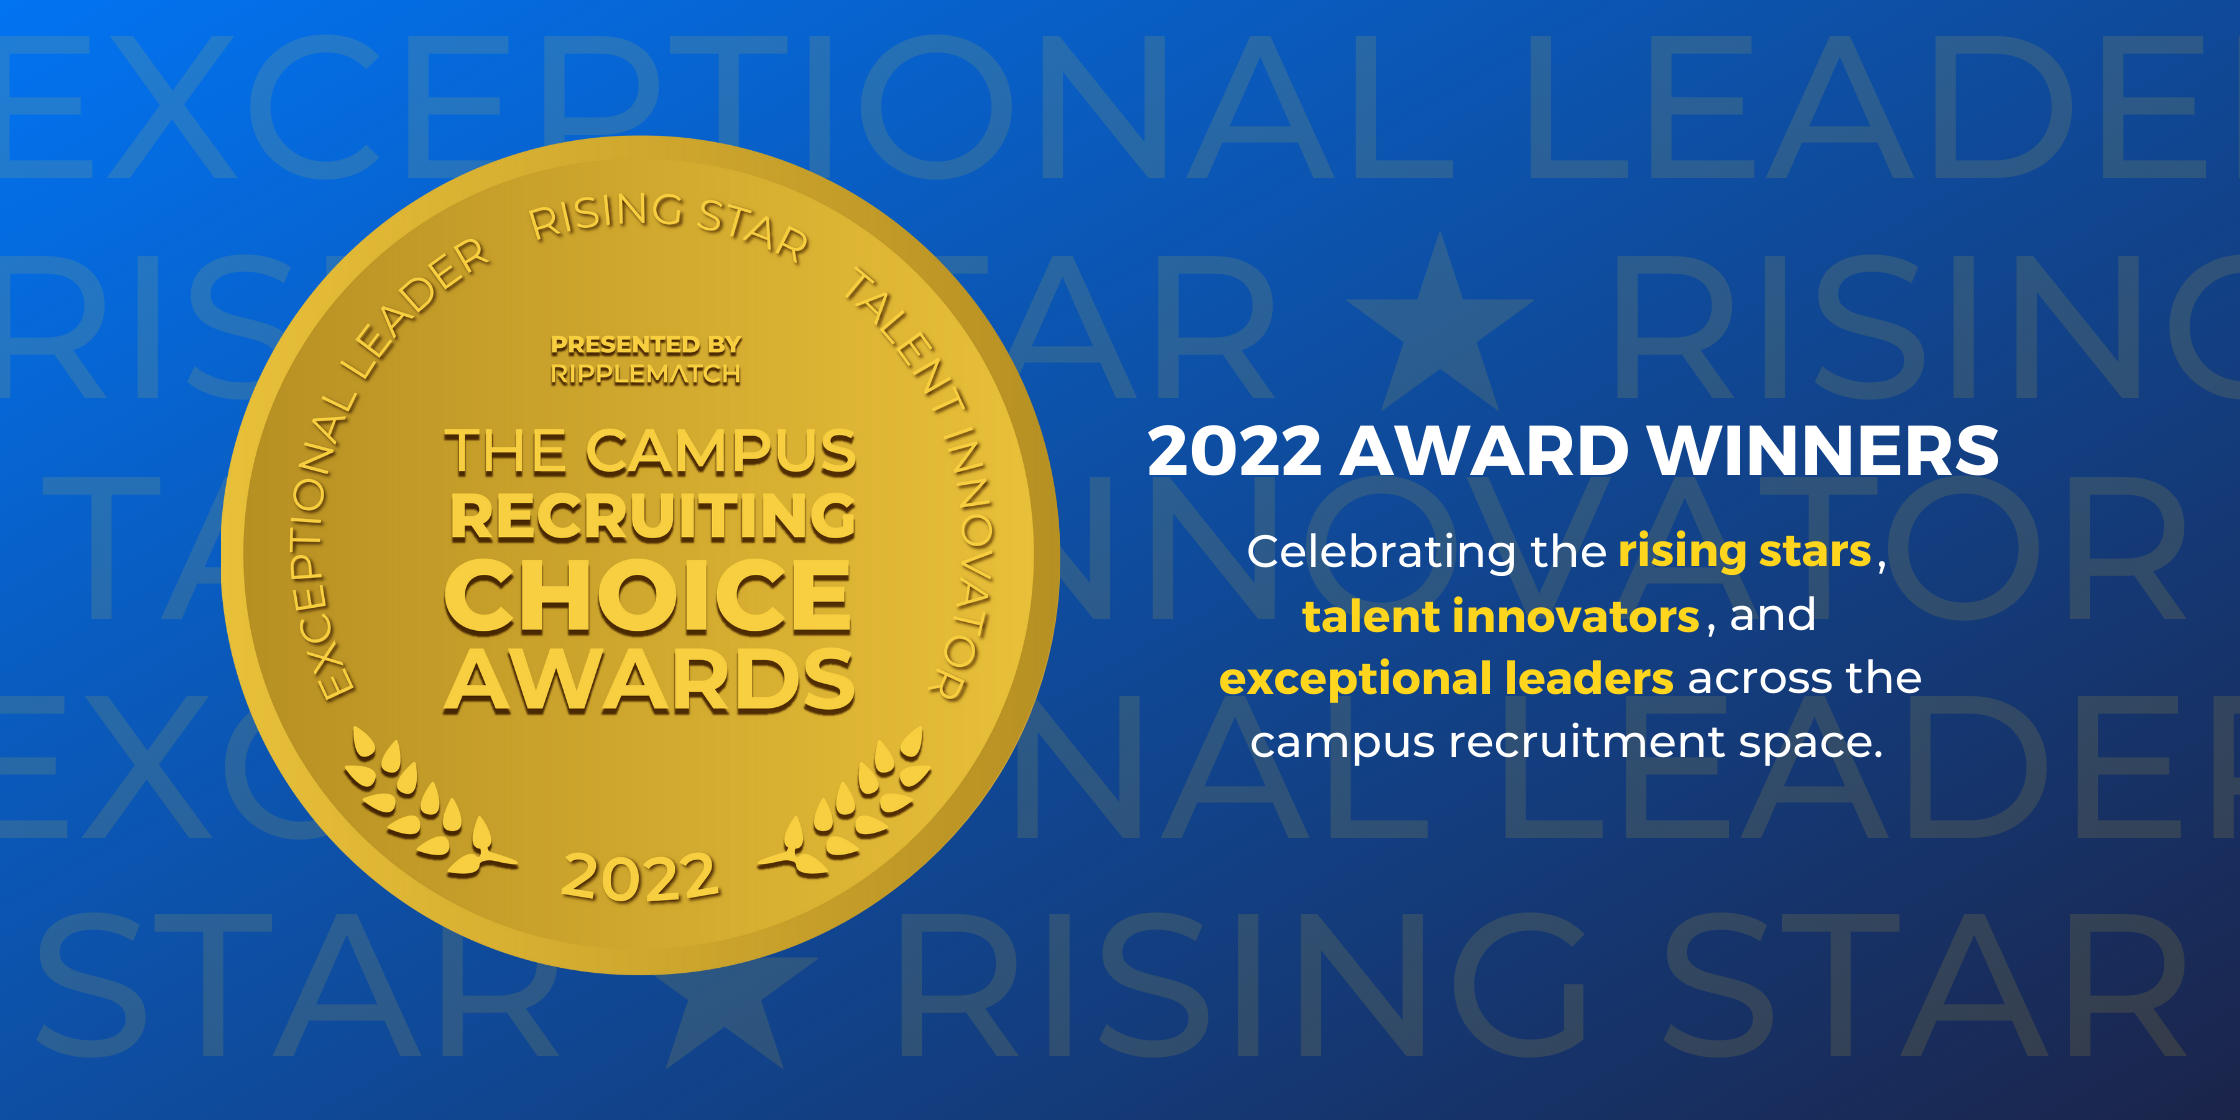 Whole Awards 2022 CRCA Award Winners Landing Page